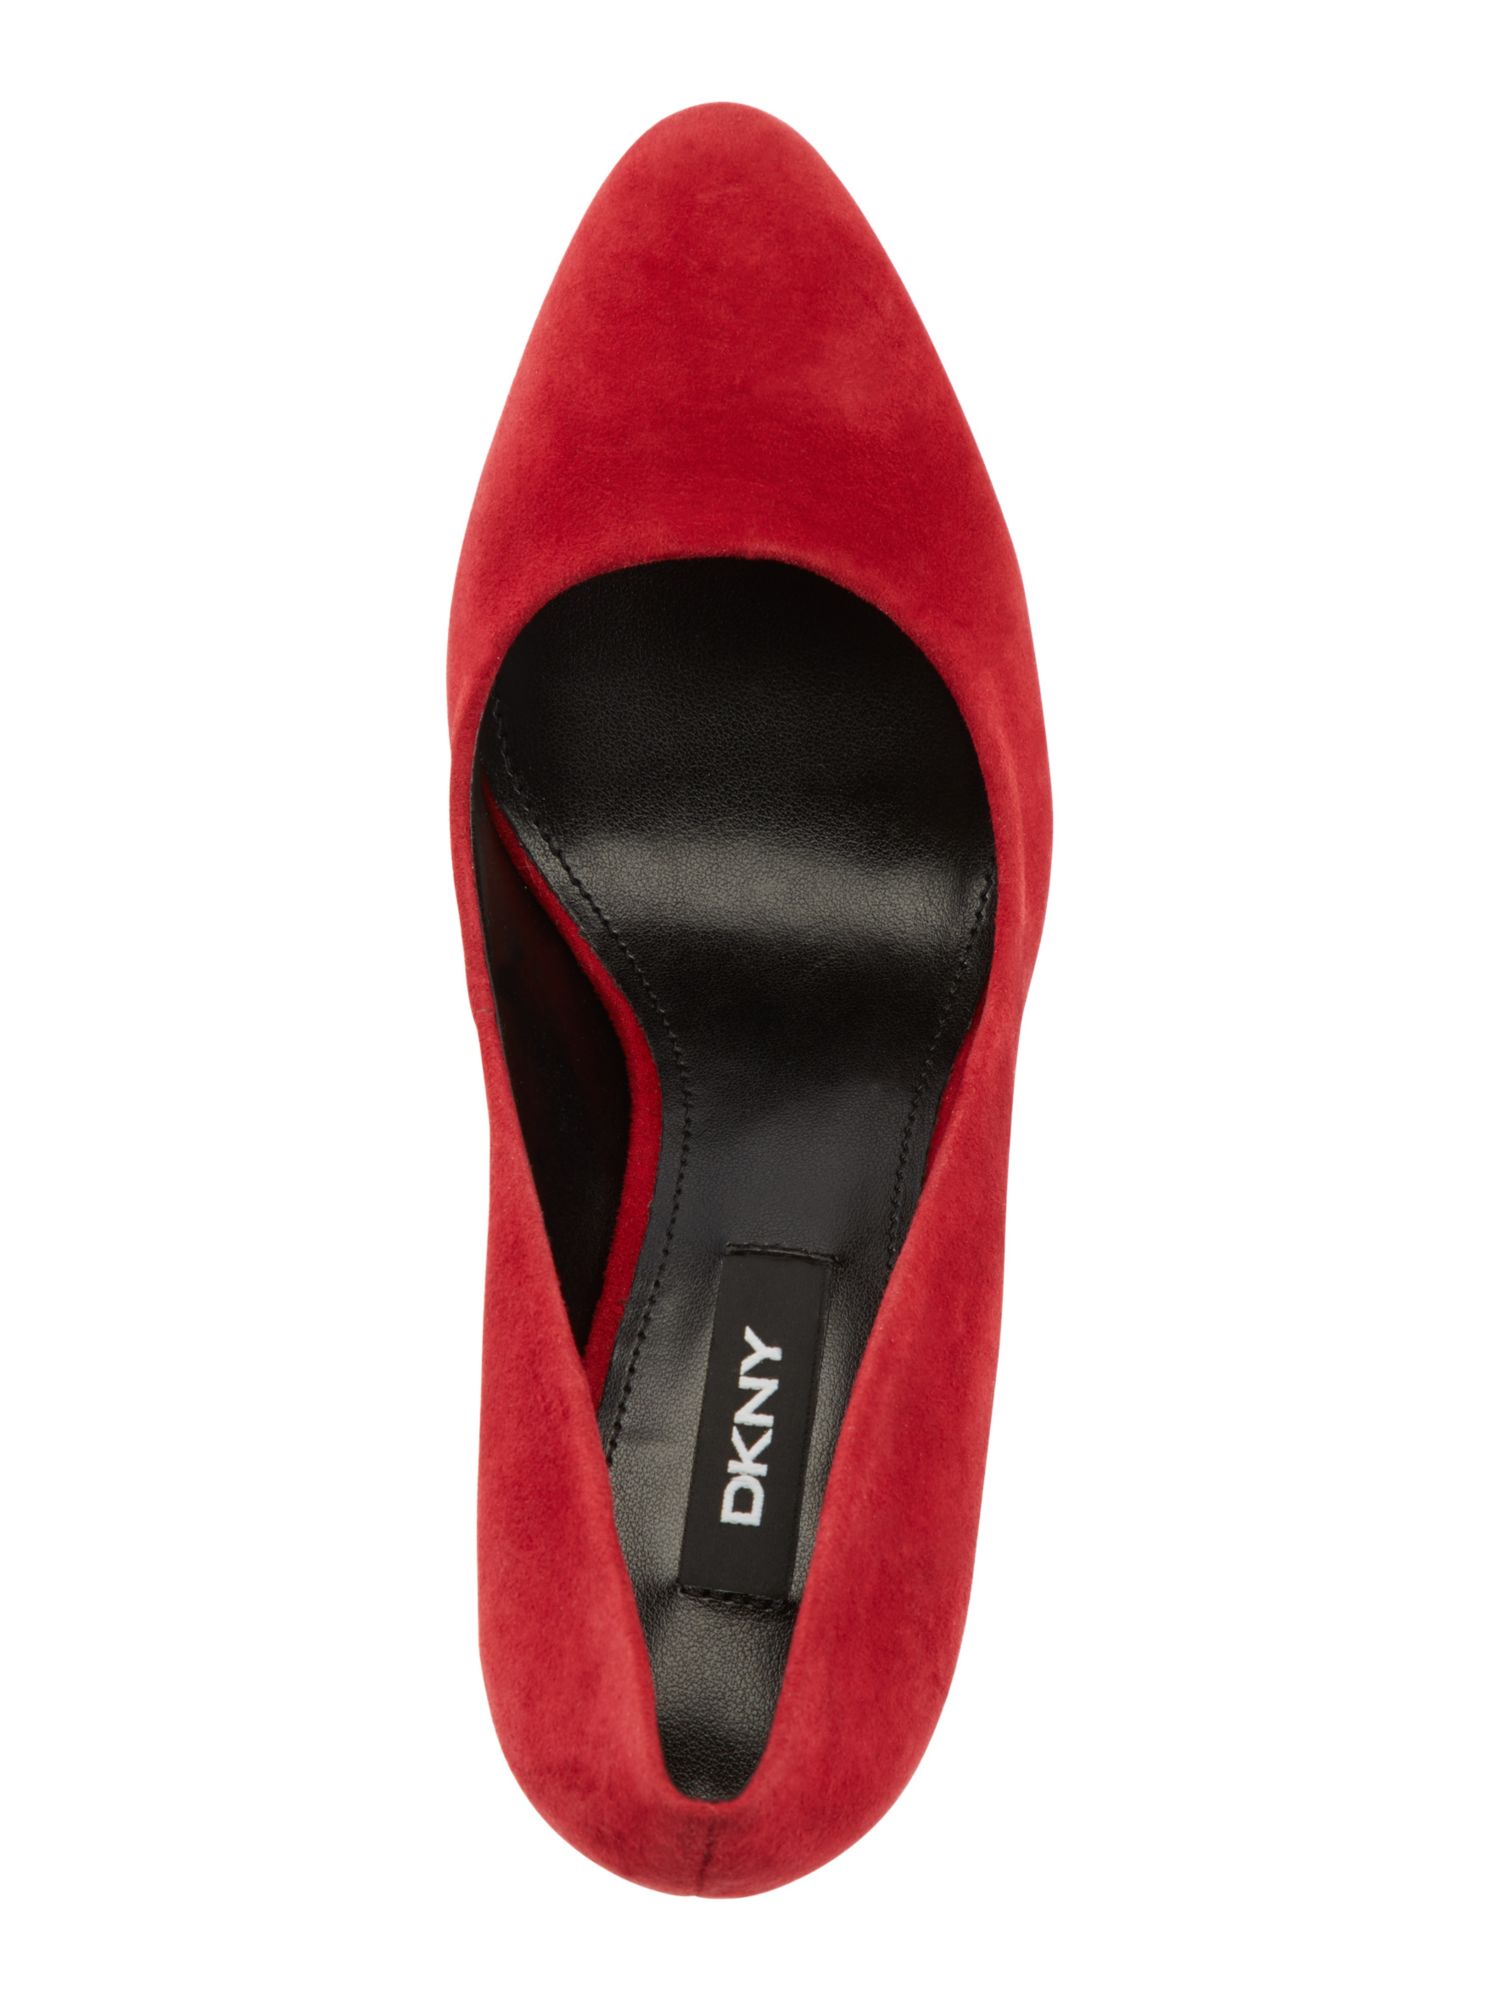 DKNY Womens Red Logo Heel Plate Cushioned Metallic Sila Almond Toe Block Heel Slip On Leather Dress Pumps Shoes 7 M